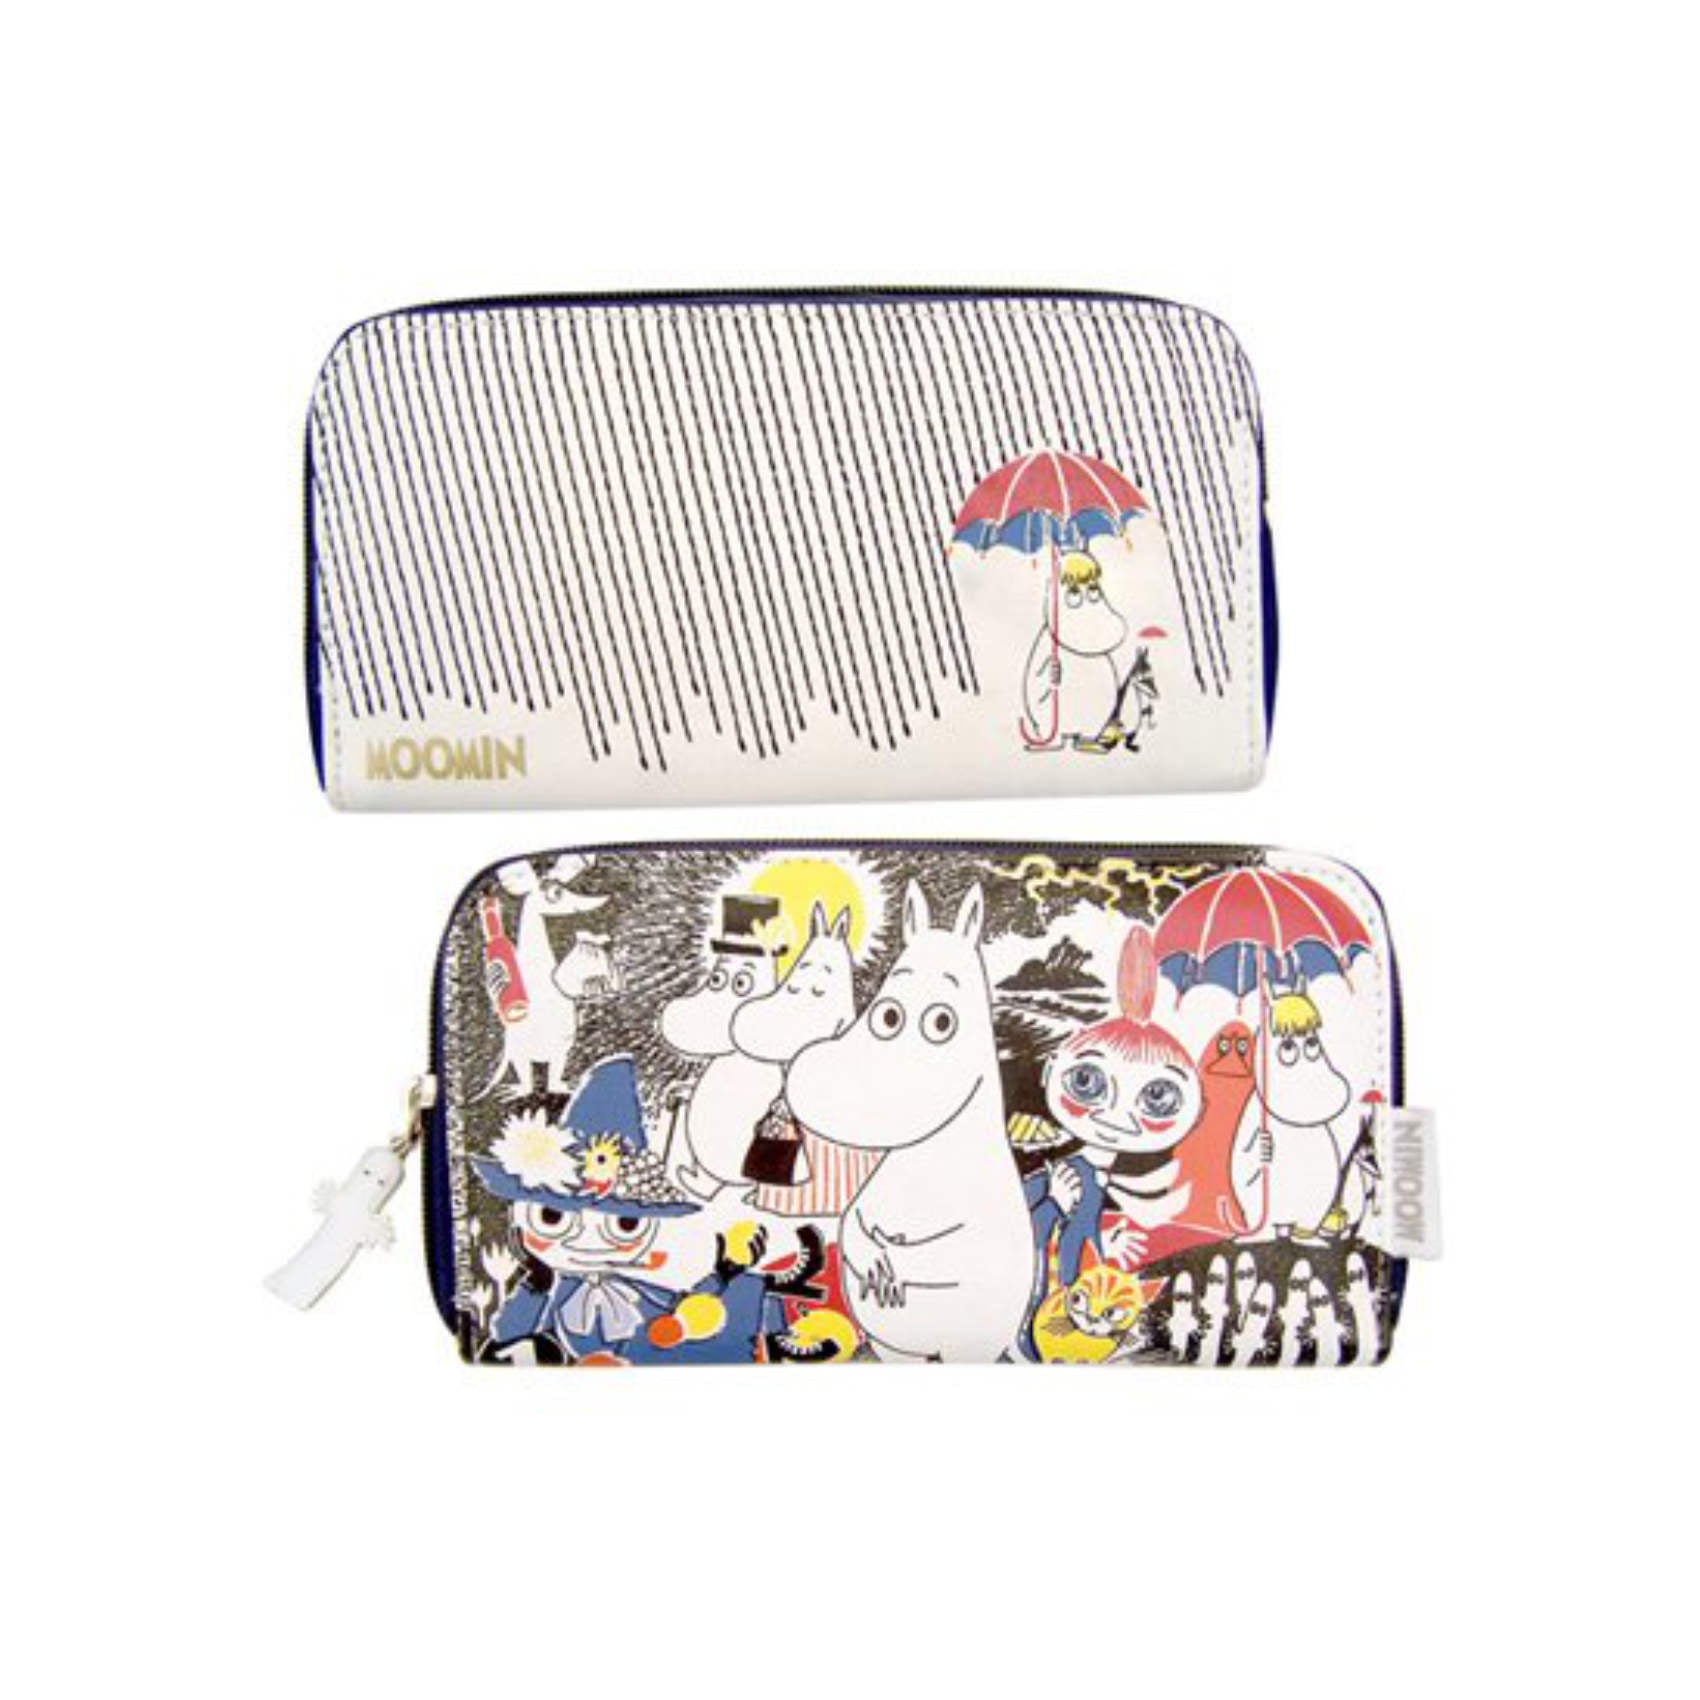 Moomin Comic Wallet by Disaster Designs